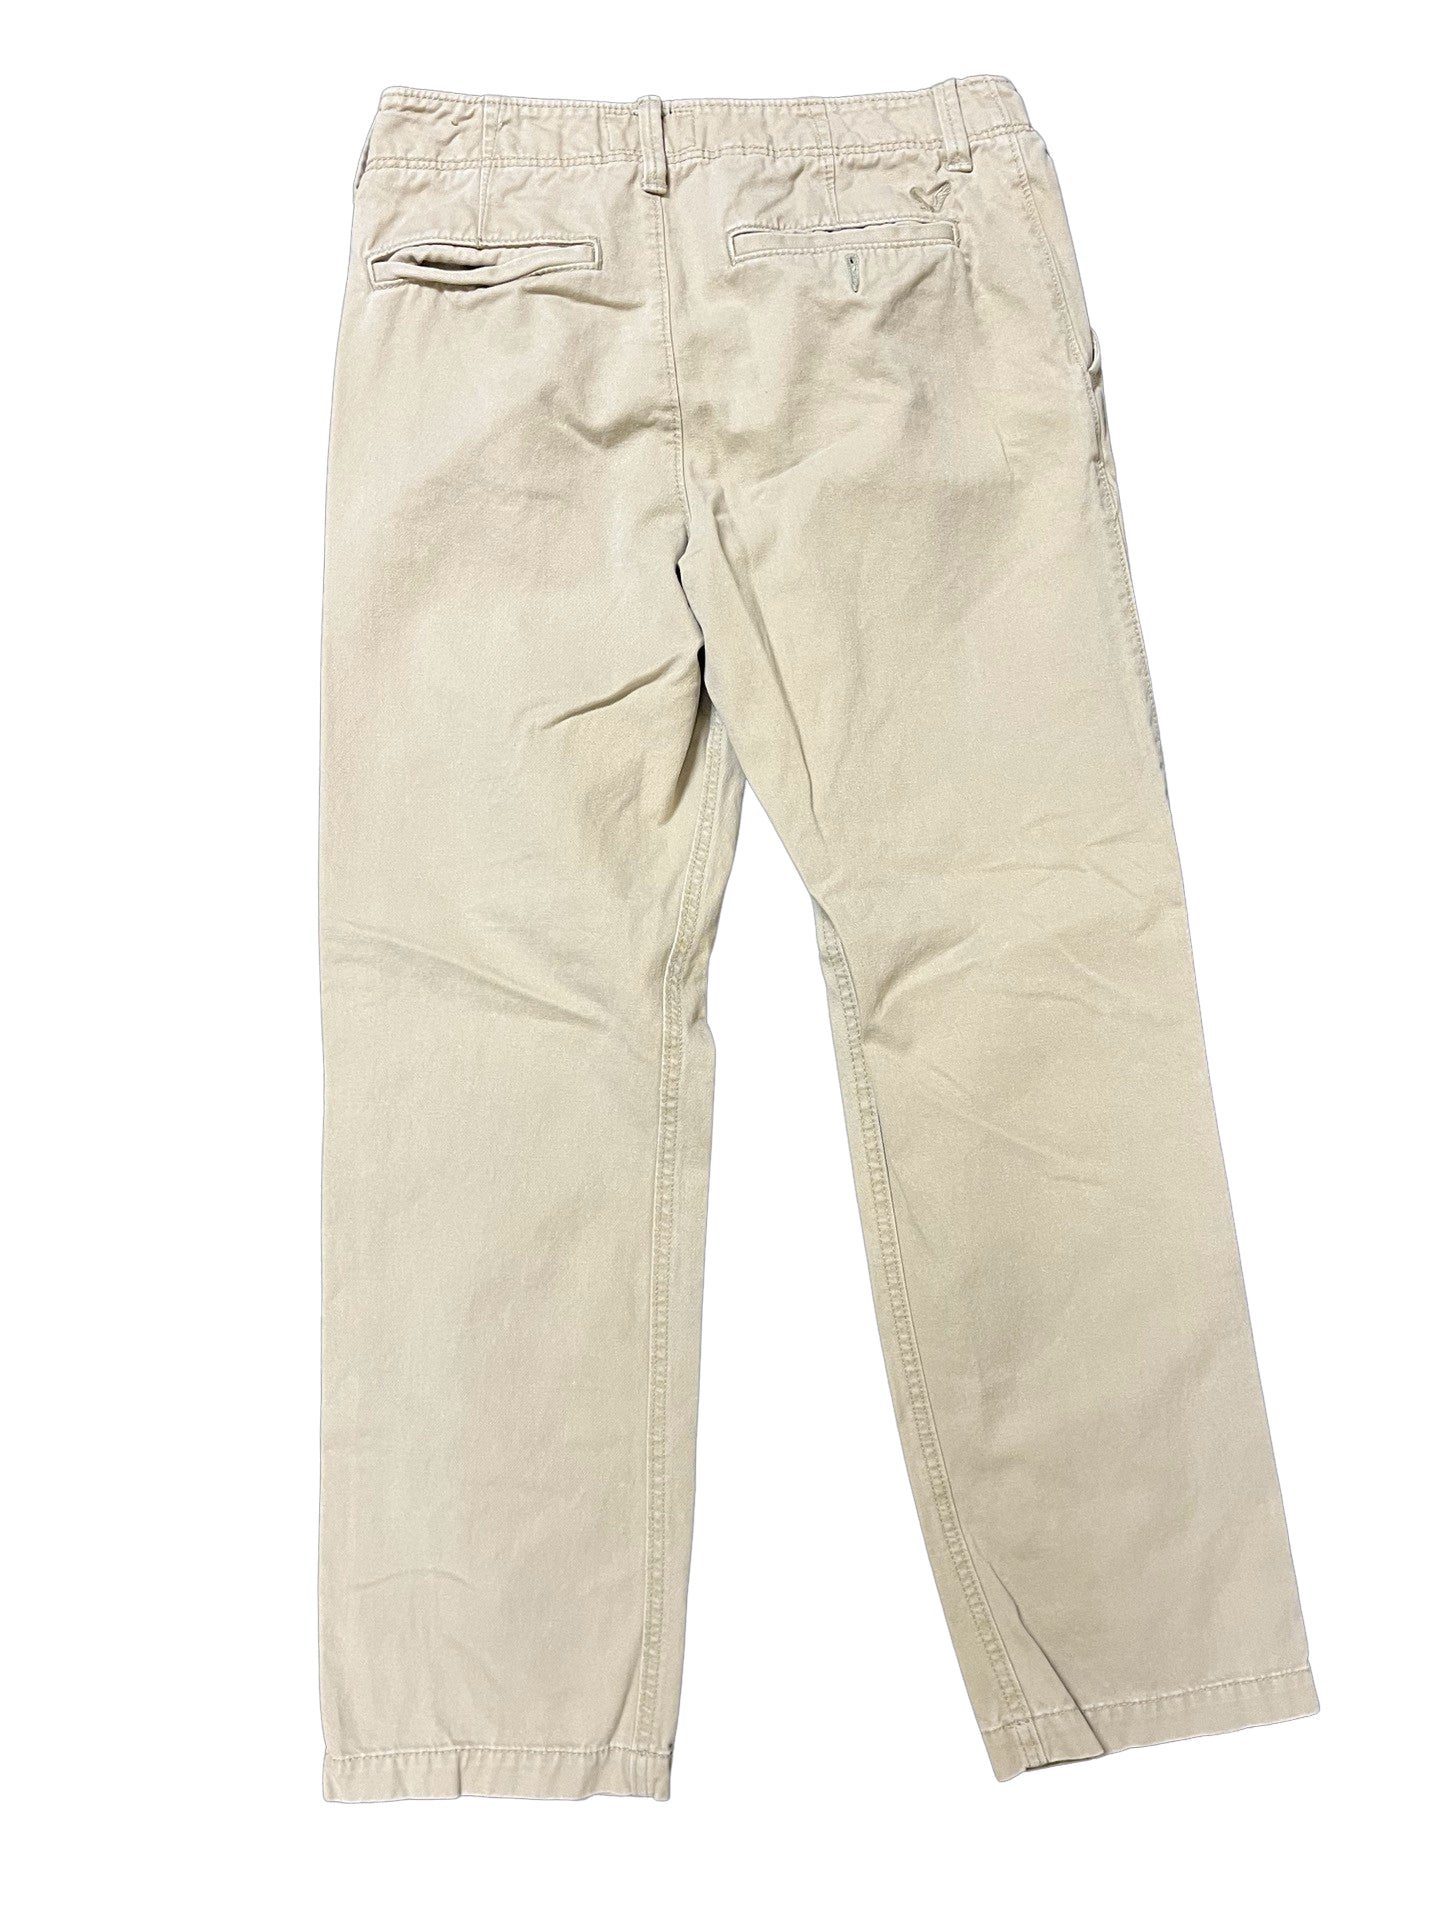 Size 30x30 American Eagle Pants